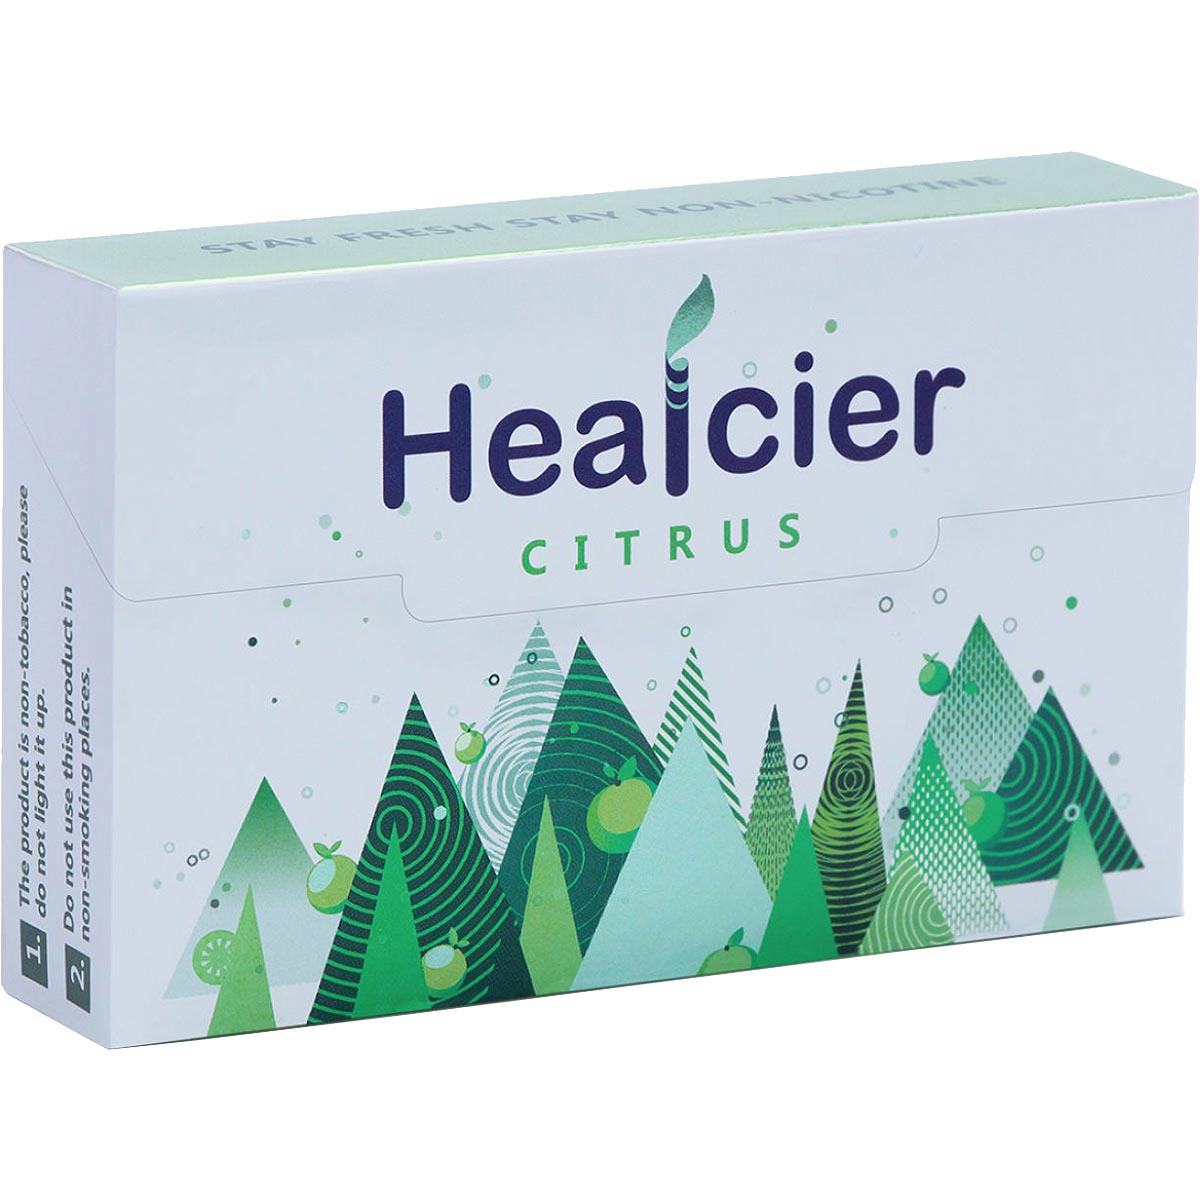 Healcier - Citrus Non-Nicotine (1 pack)